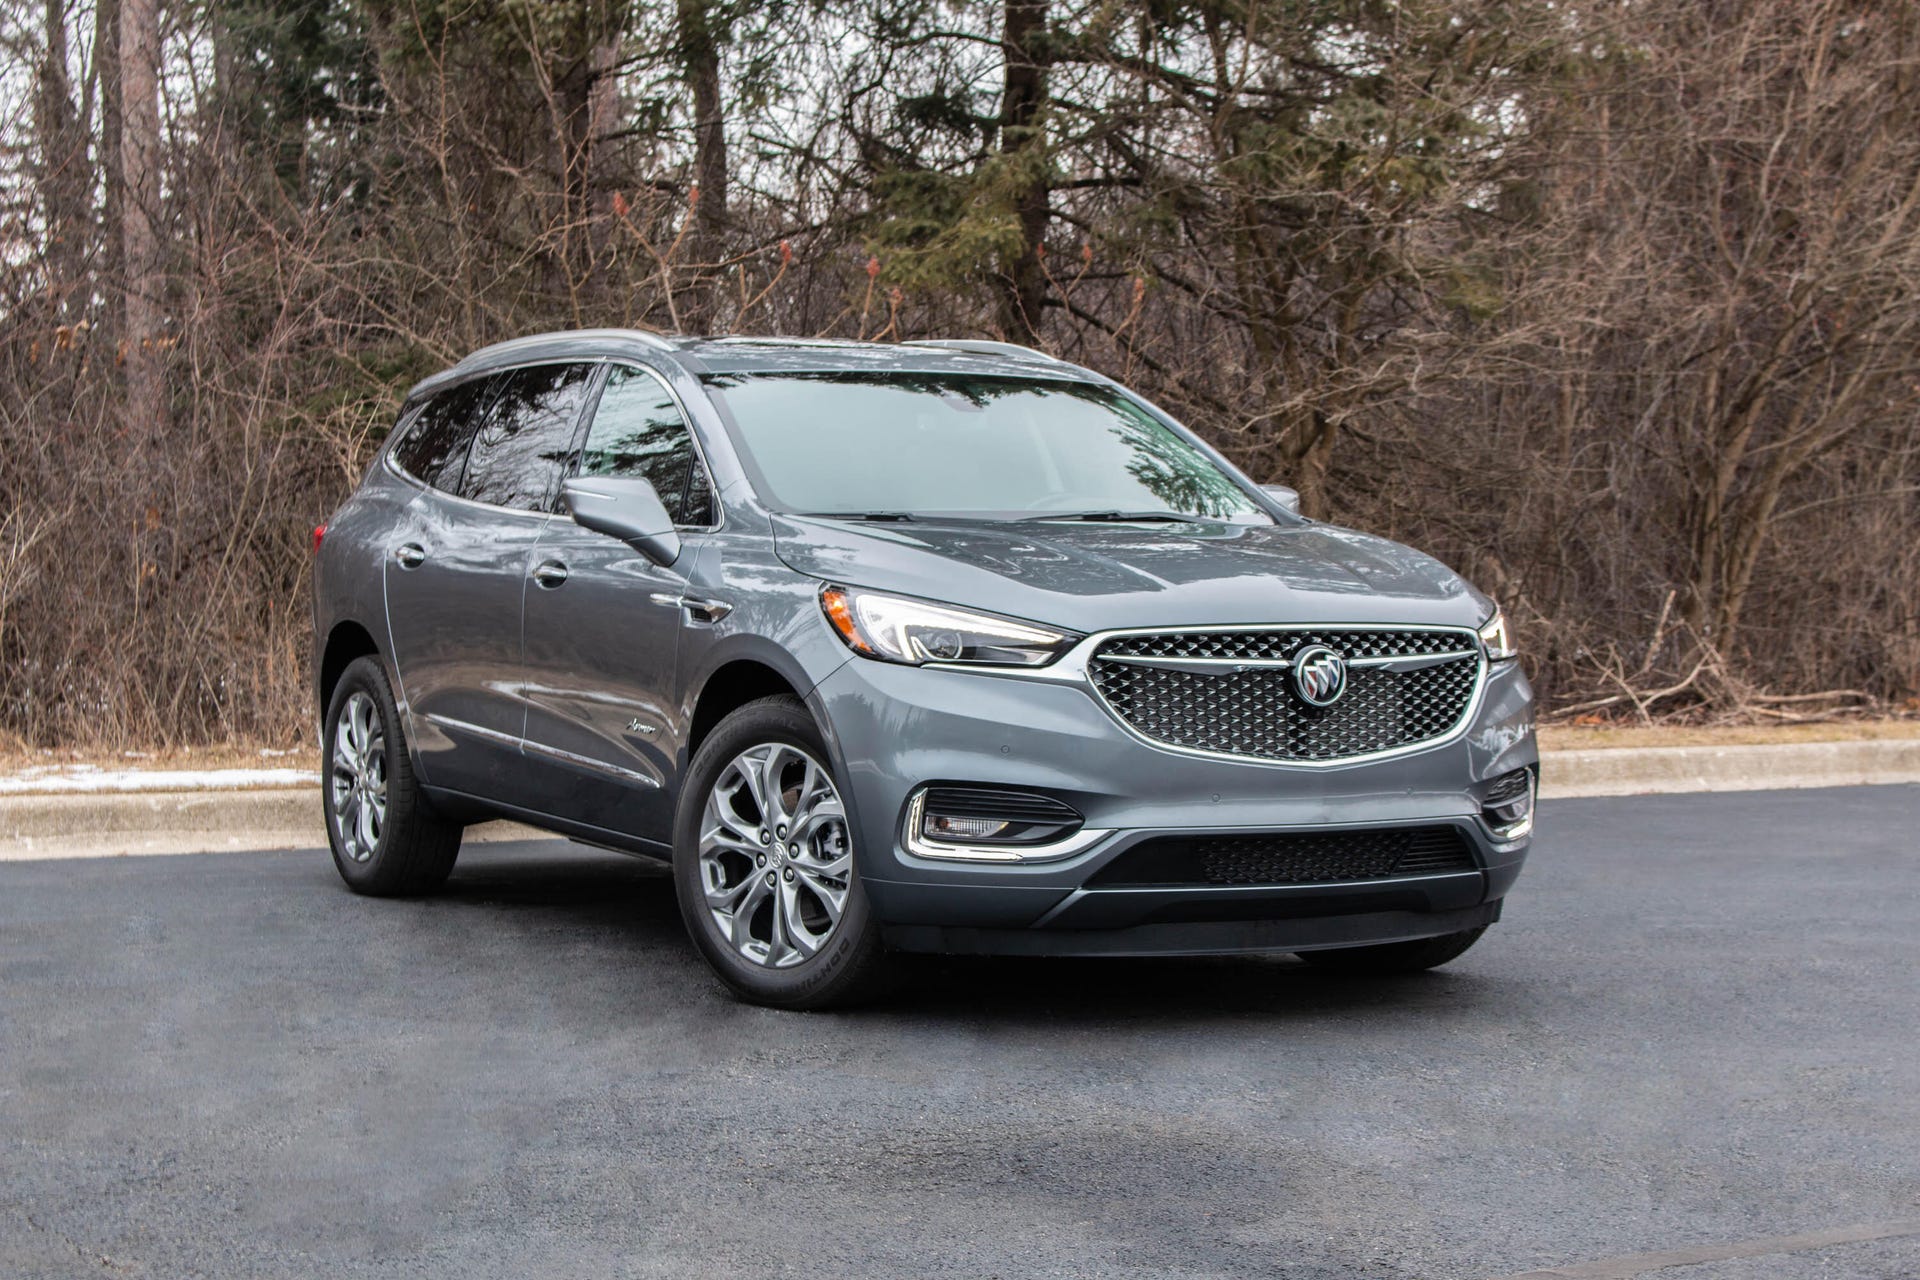 2021 Buick Enclave review: Low-key comfort wagon - CNET